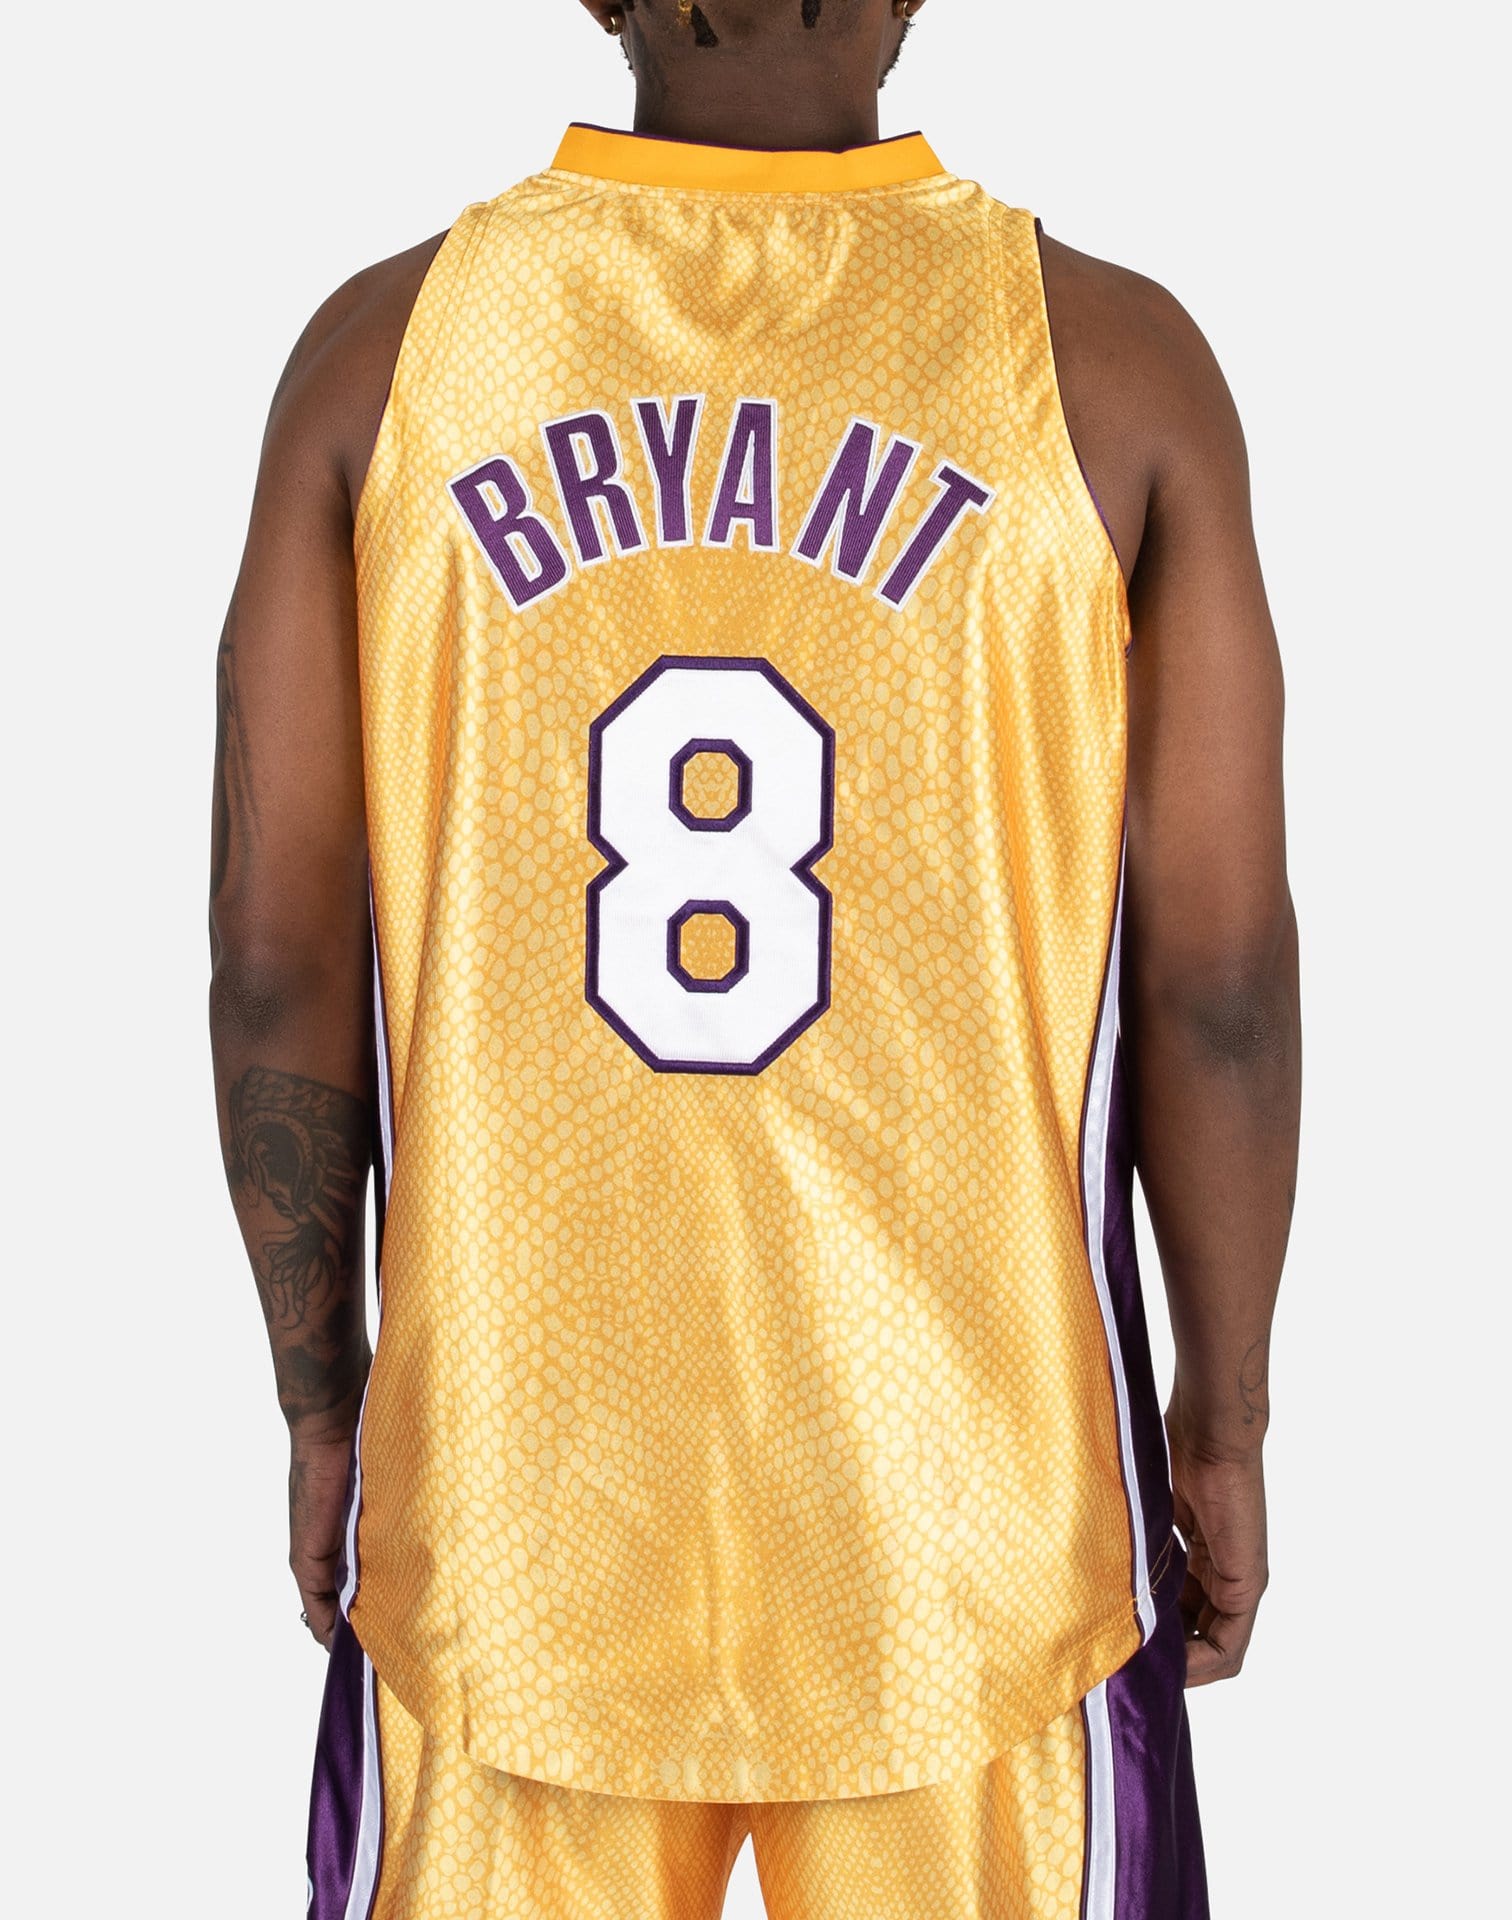 adidas Kobe Bryant Lakers Jersey Men Yellow A45978 - KICKS CREW